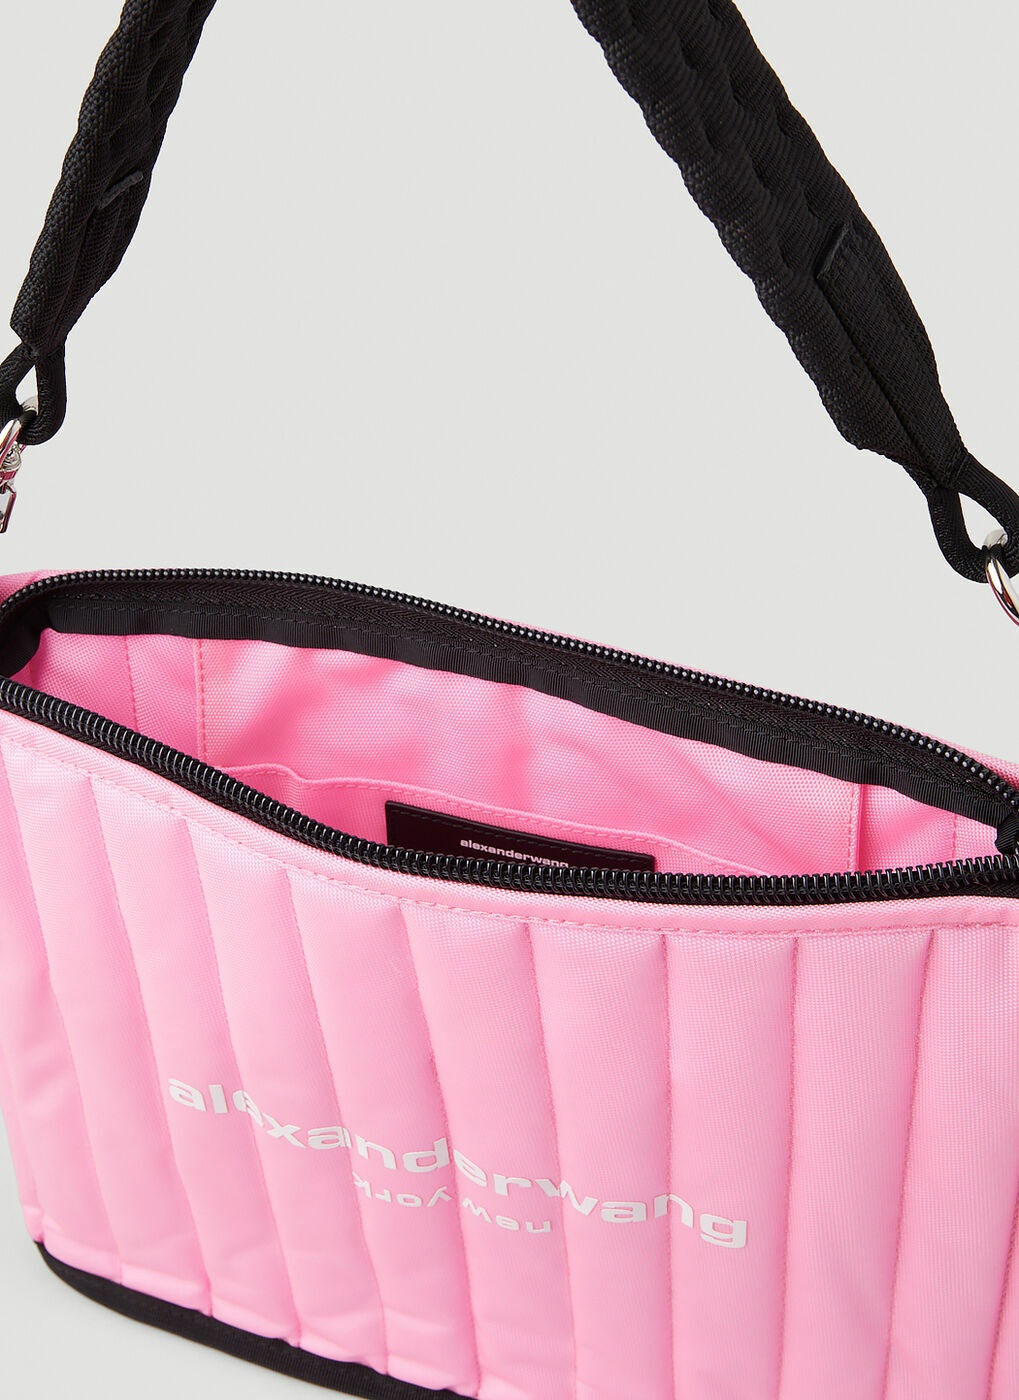 Victoria's Secret Bowler Handbags